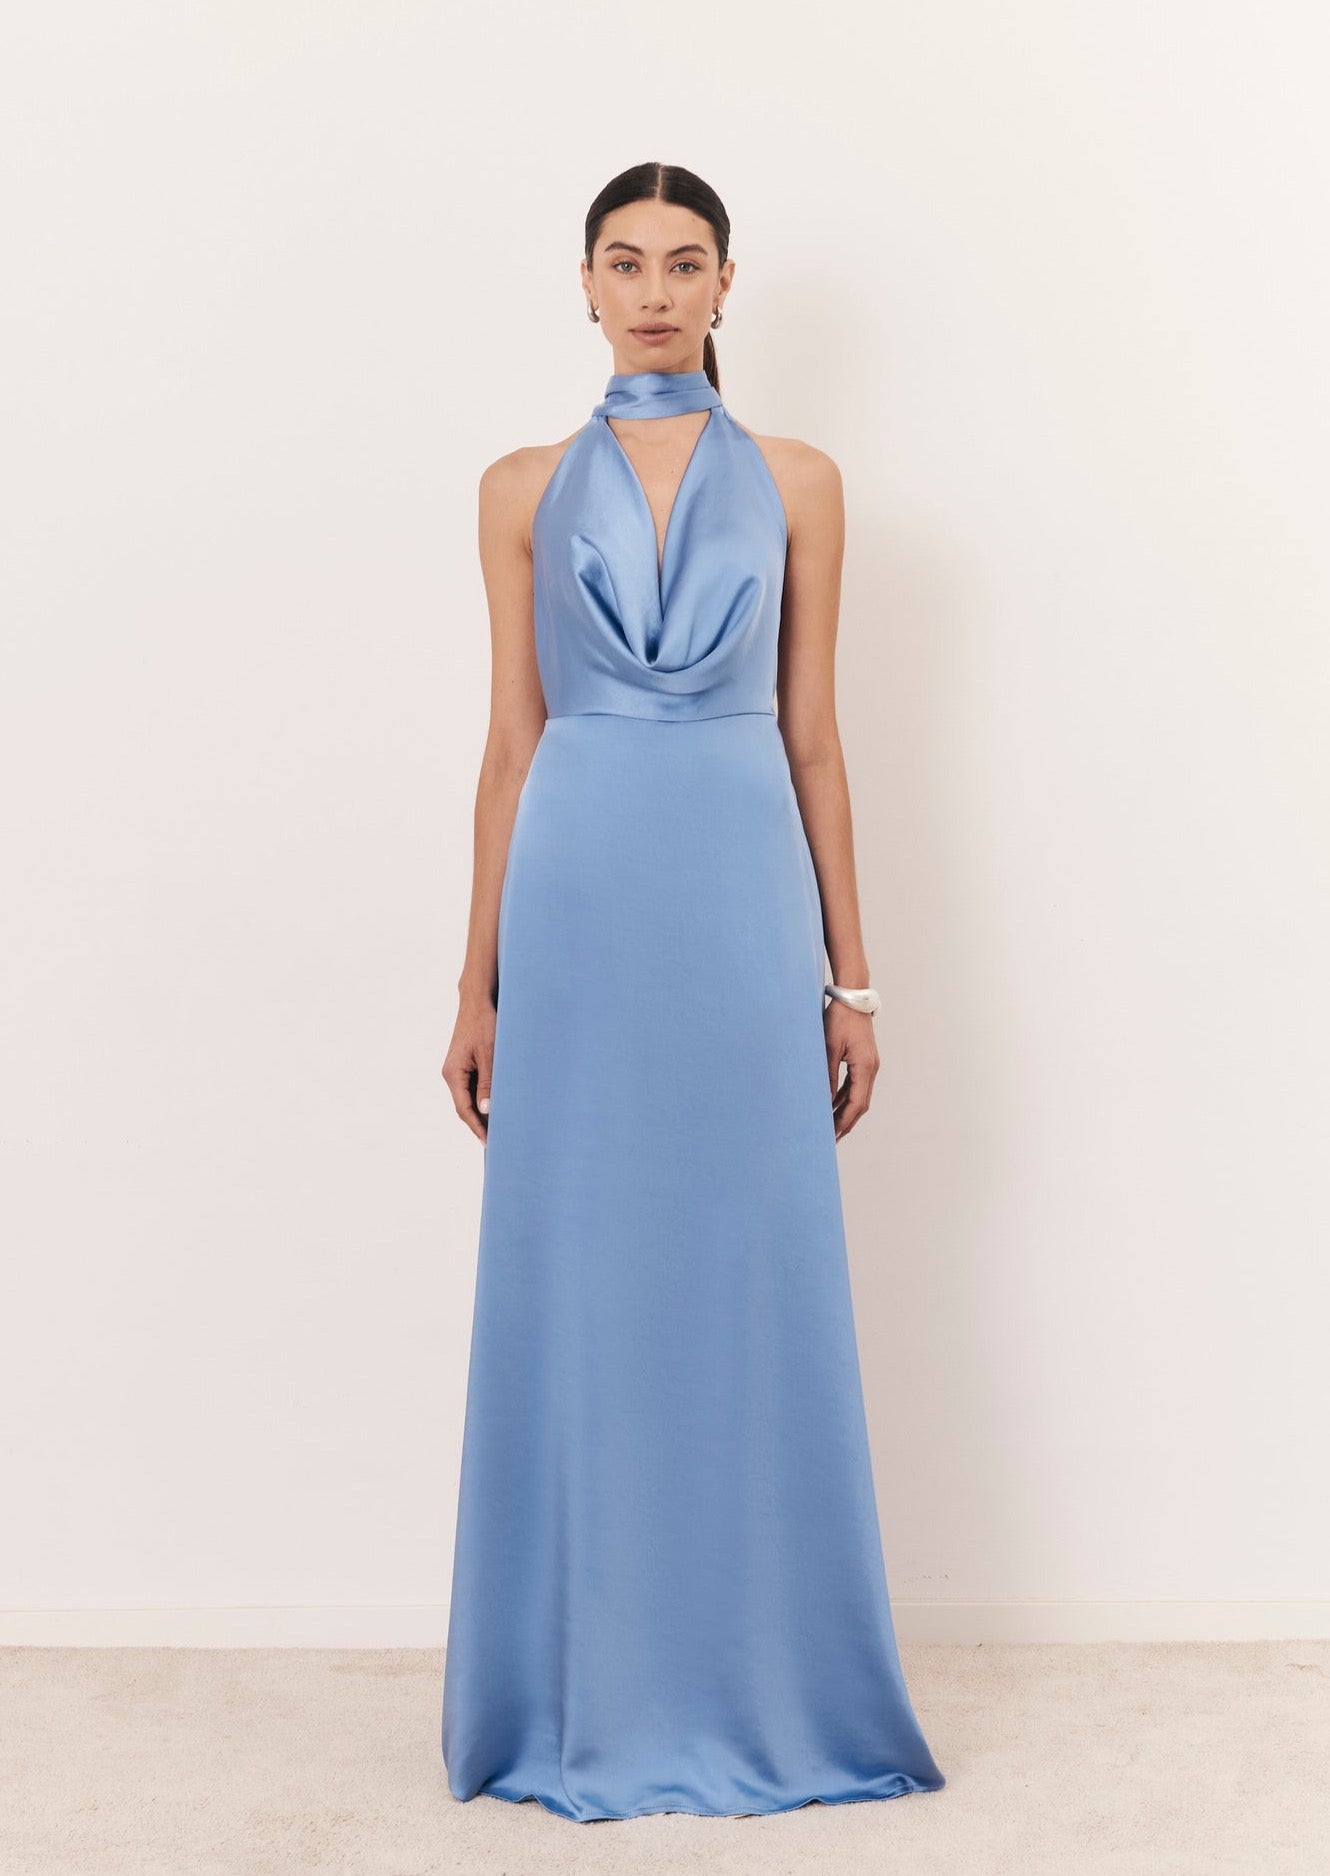 light blue Olympia dress